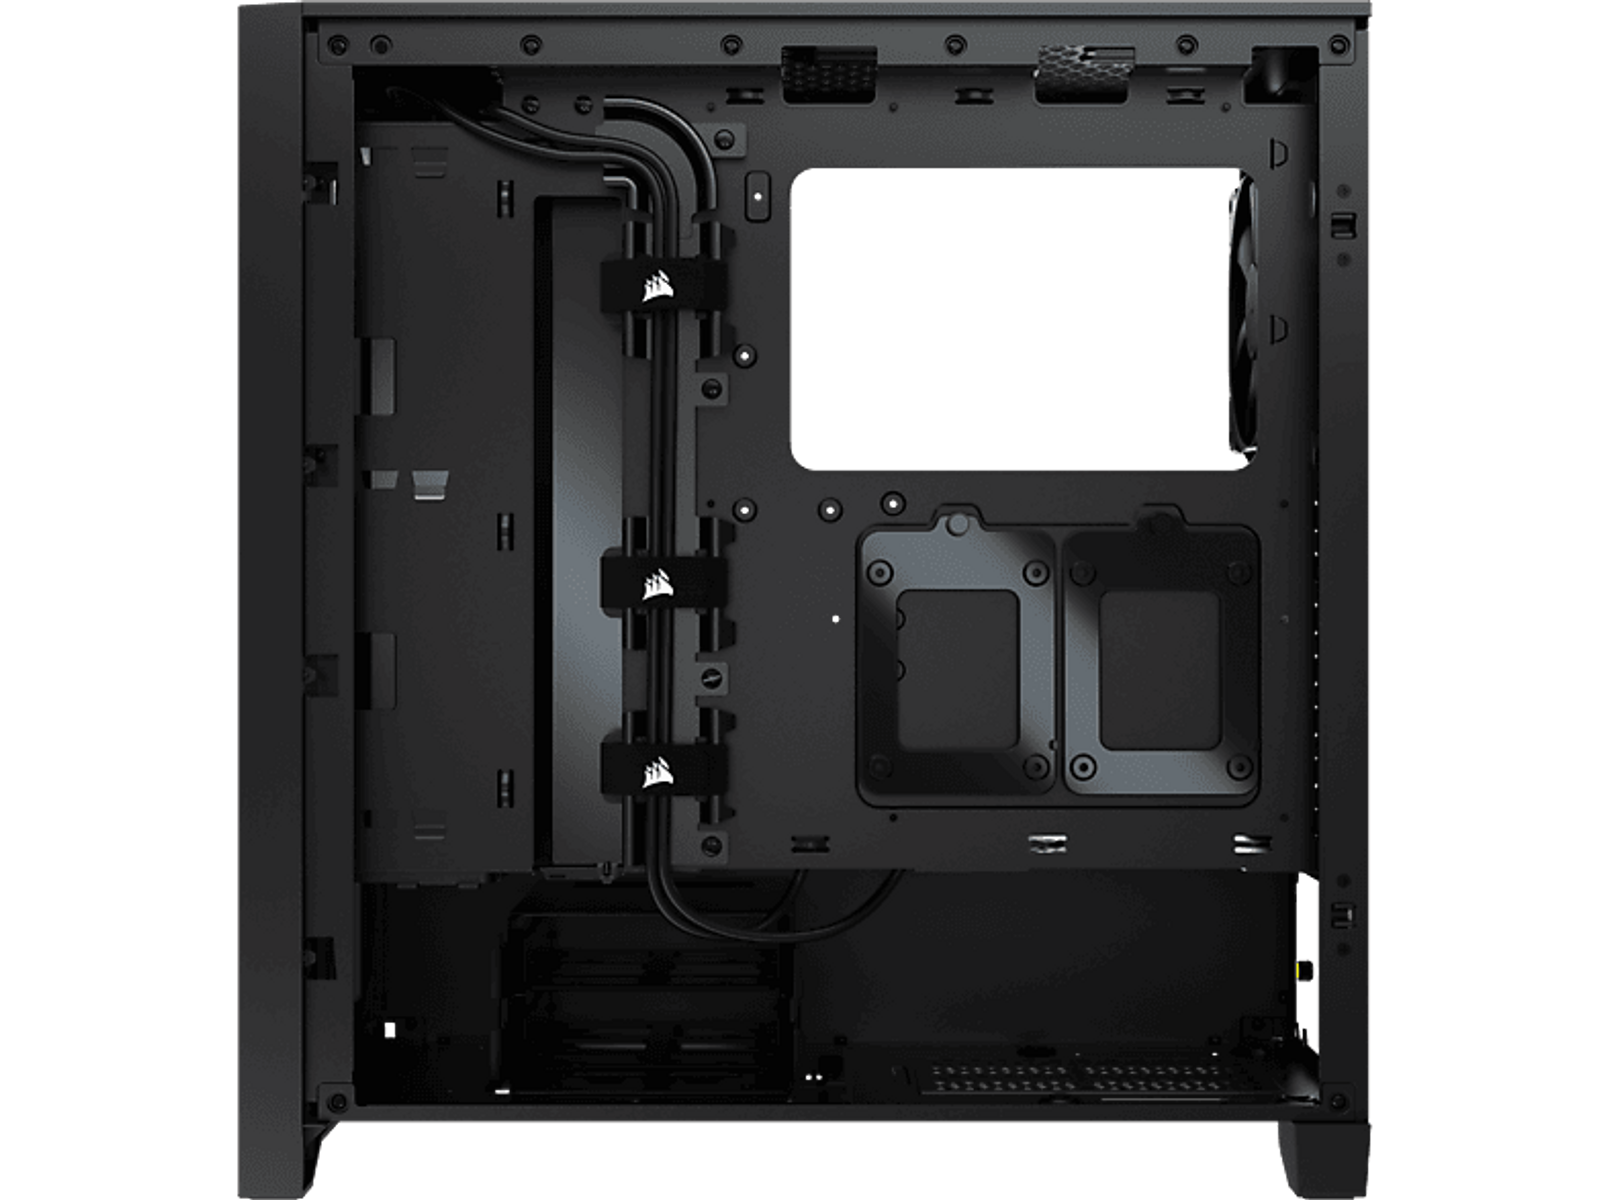 4000D BLACK Schwarz CORSAIR PC-Gehäuse, TG CC-9011200-WW AIRFLOW